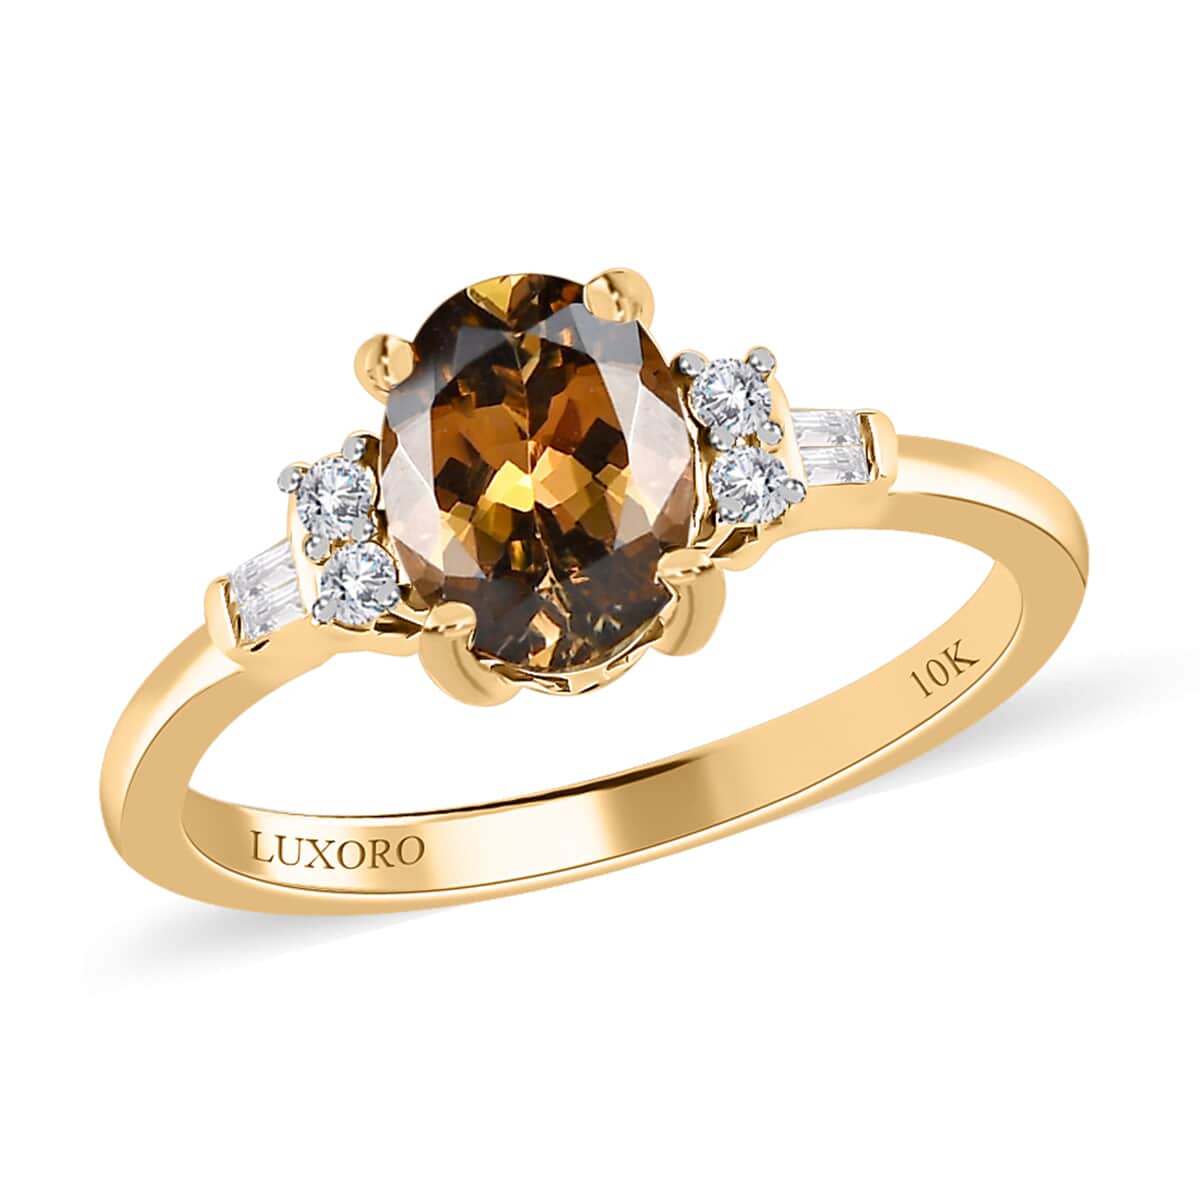 LUXORO 10K Yellow Gold Premium Natural Golden Tanzanite and Diamond Ring (Size 10.0) 1.85 Grams 1.35 ctw image number 0